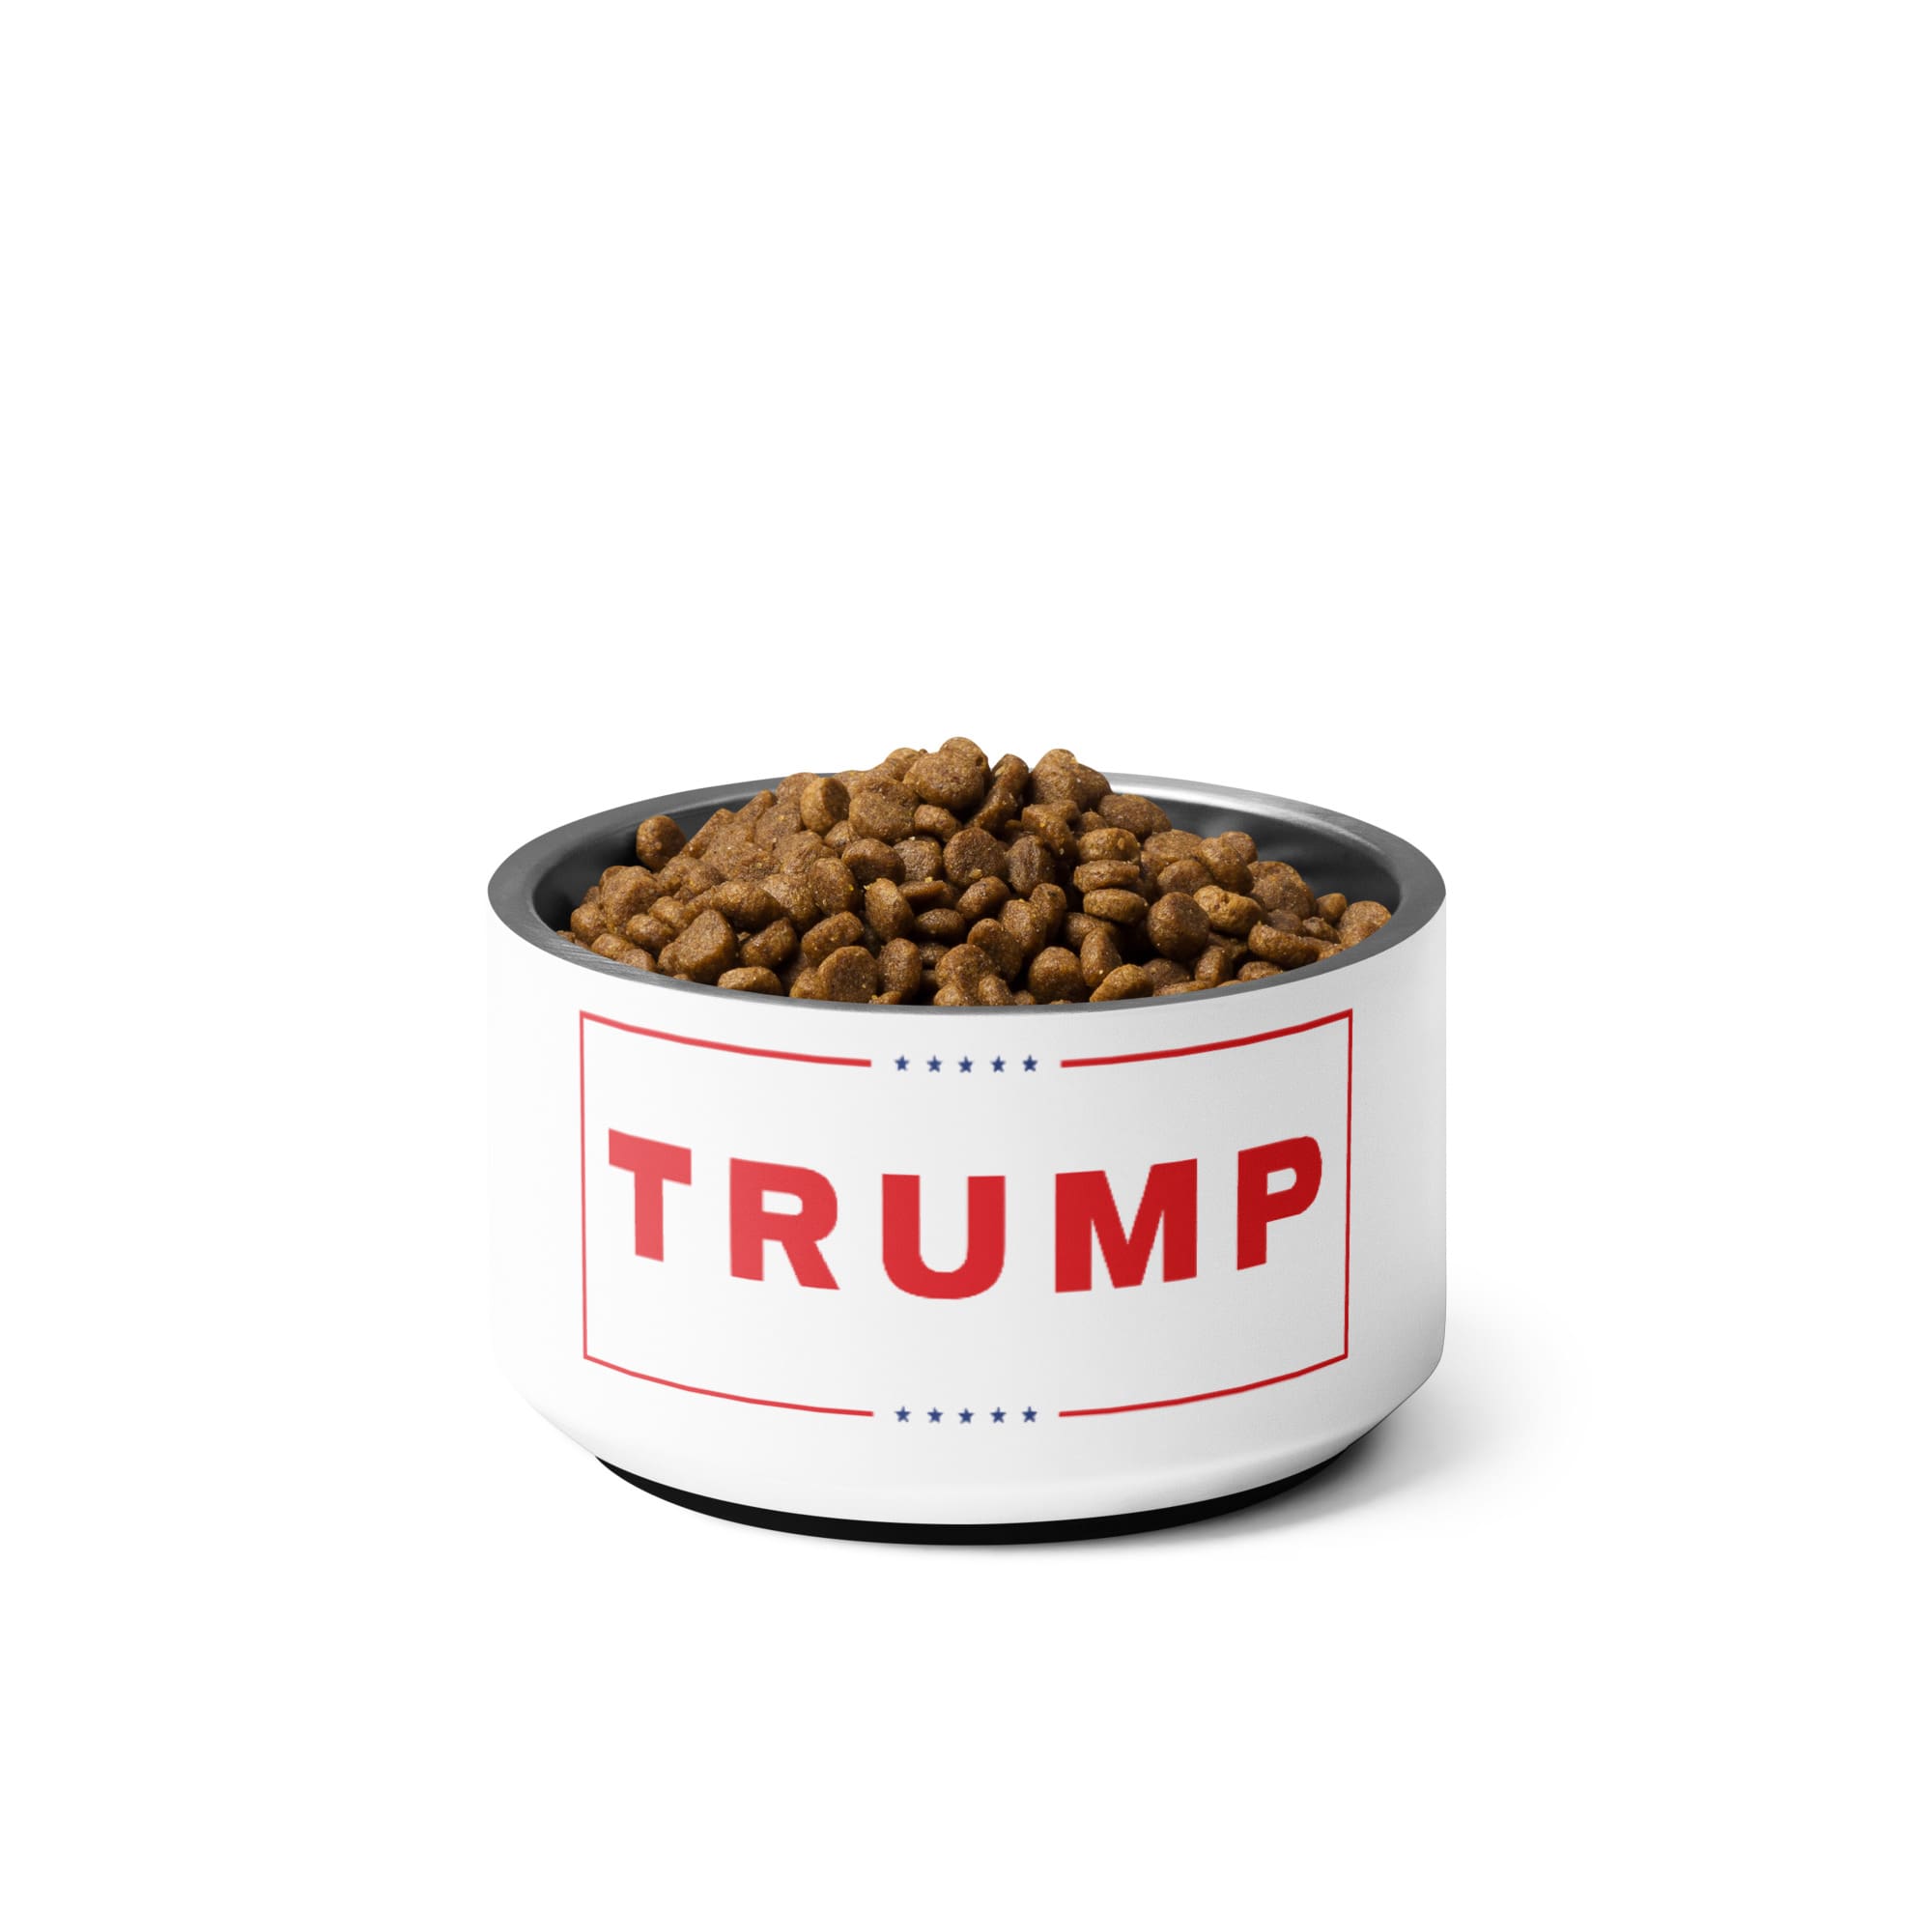 TRUMP Stainless Steel Pet Bowl by Trump is Punk Rock